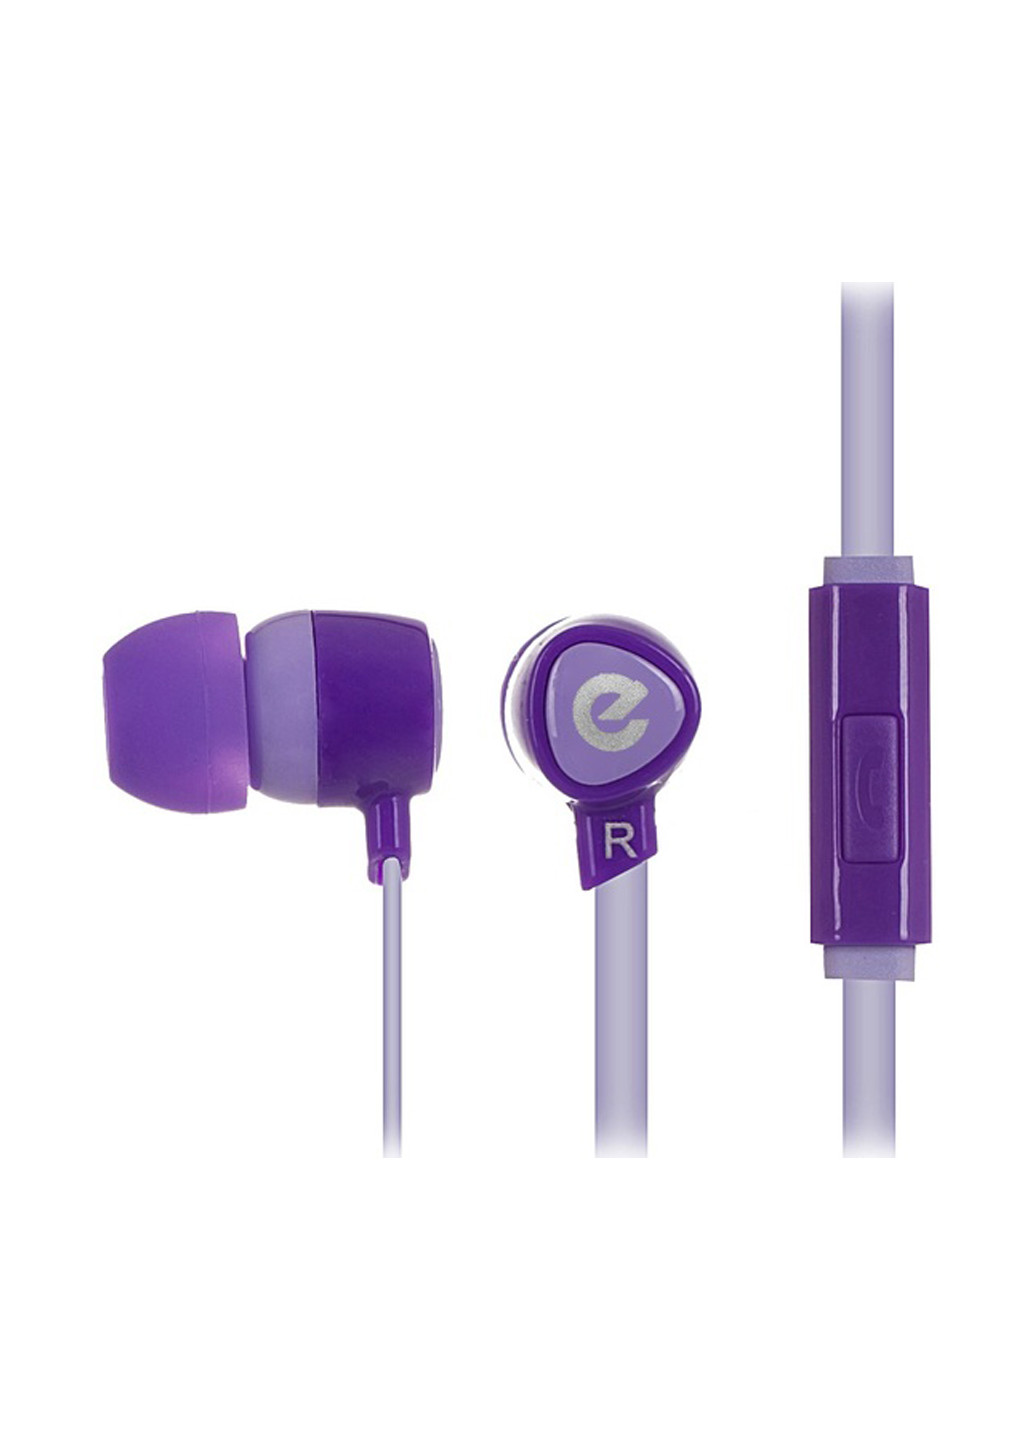 Навушники VM-201 Фіолетовий Ergo vm-201 фиолетовый (135029178)